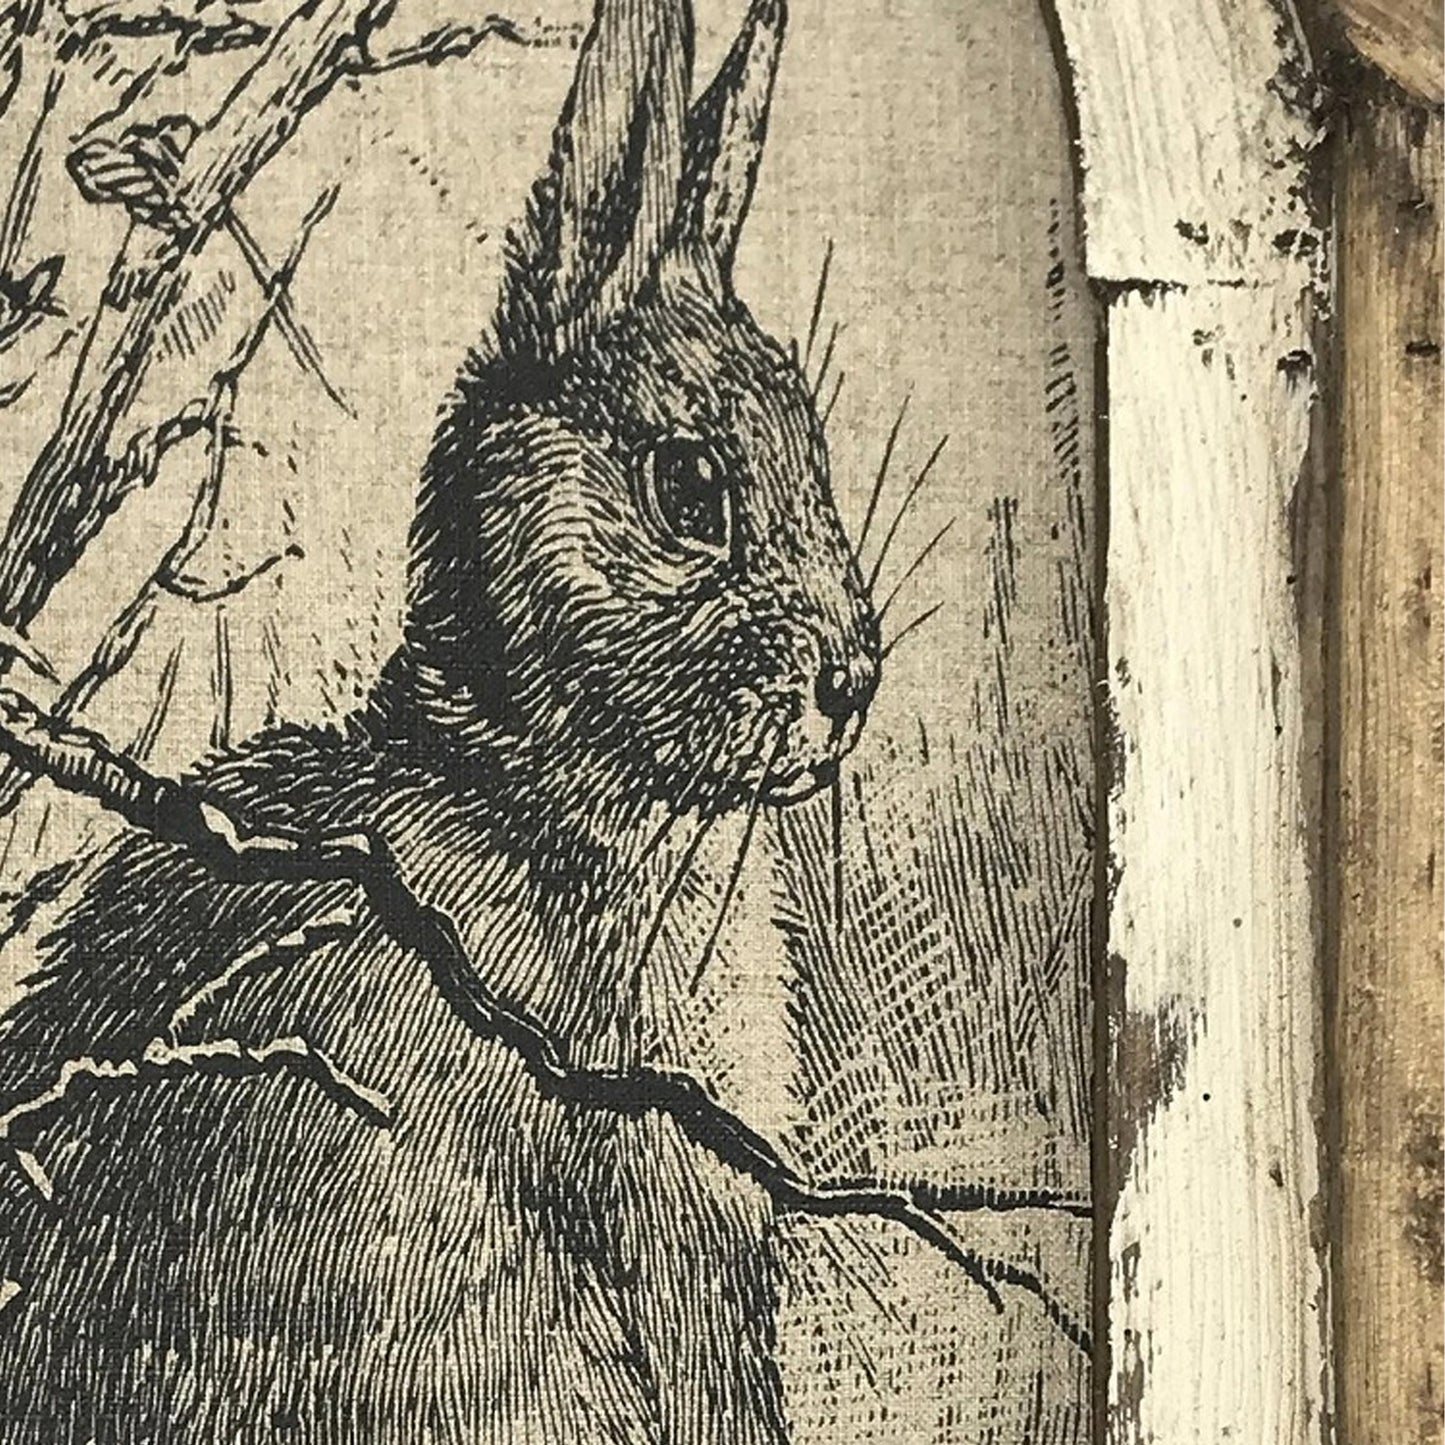 Rustic Rabbit Wooden Board Wall Art